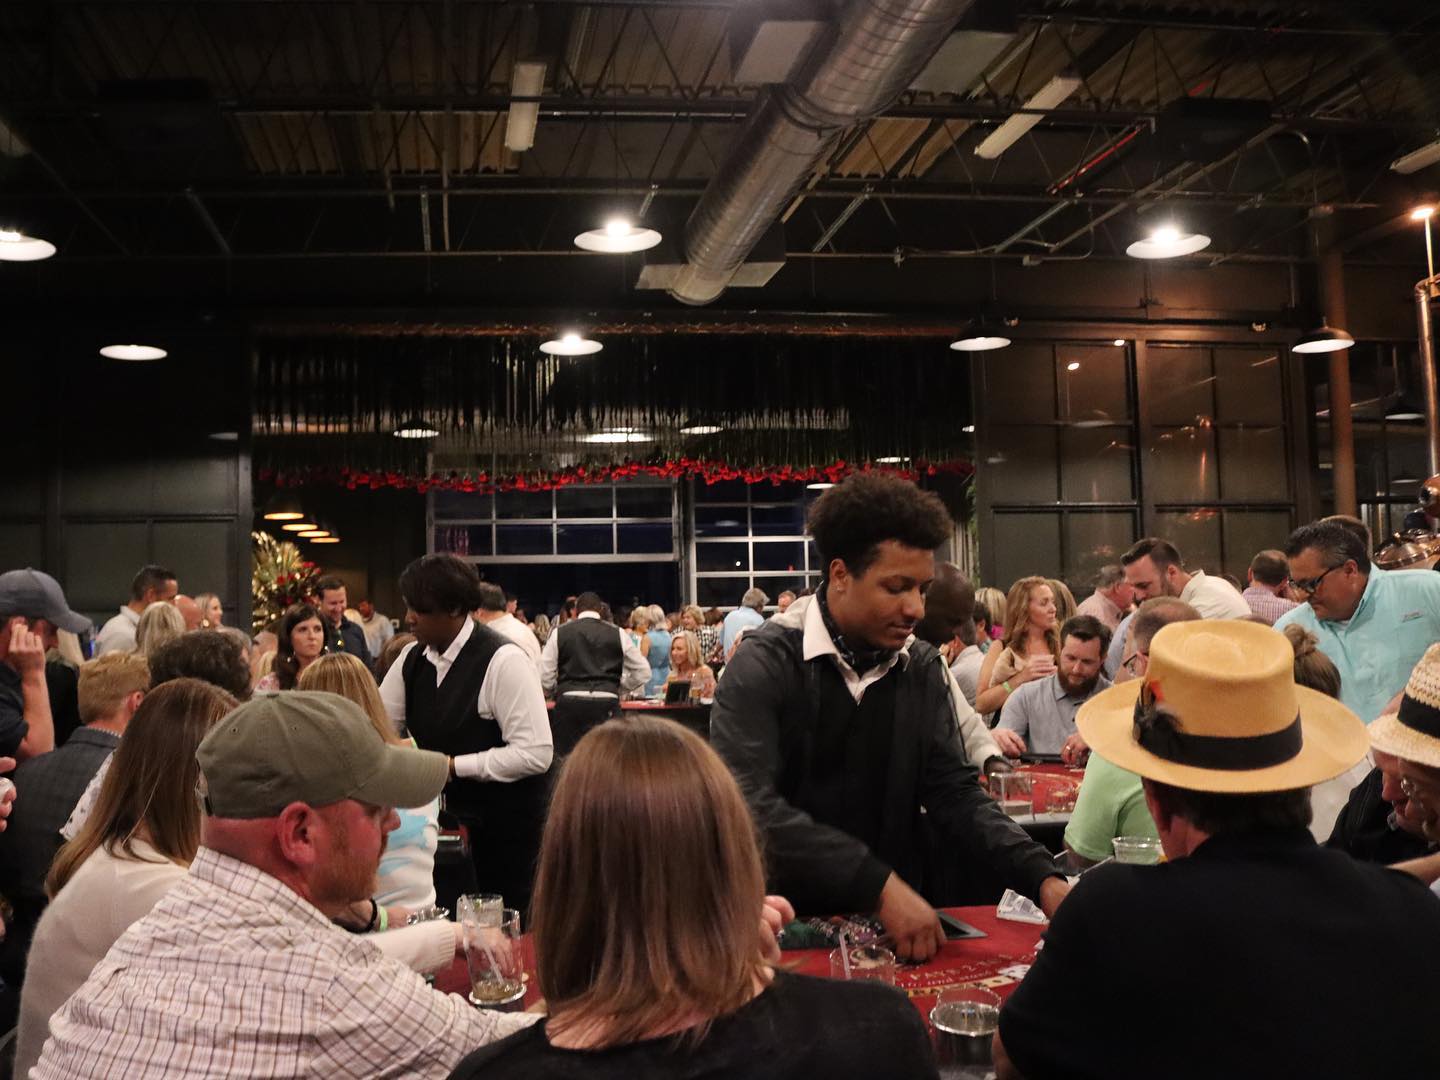 Trussville City Schools Foundation raises $12K at Casino Night event